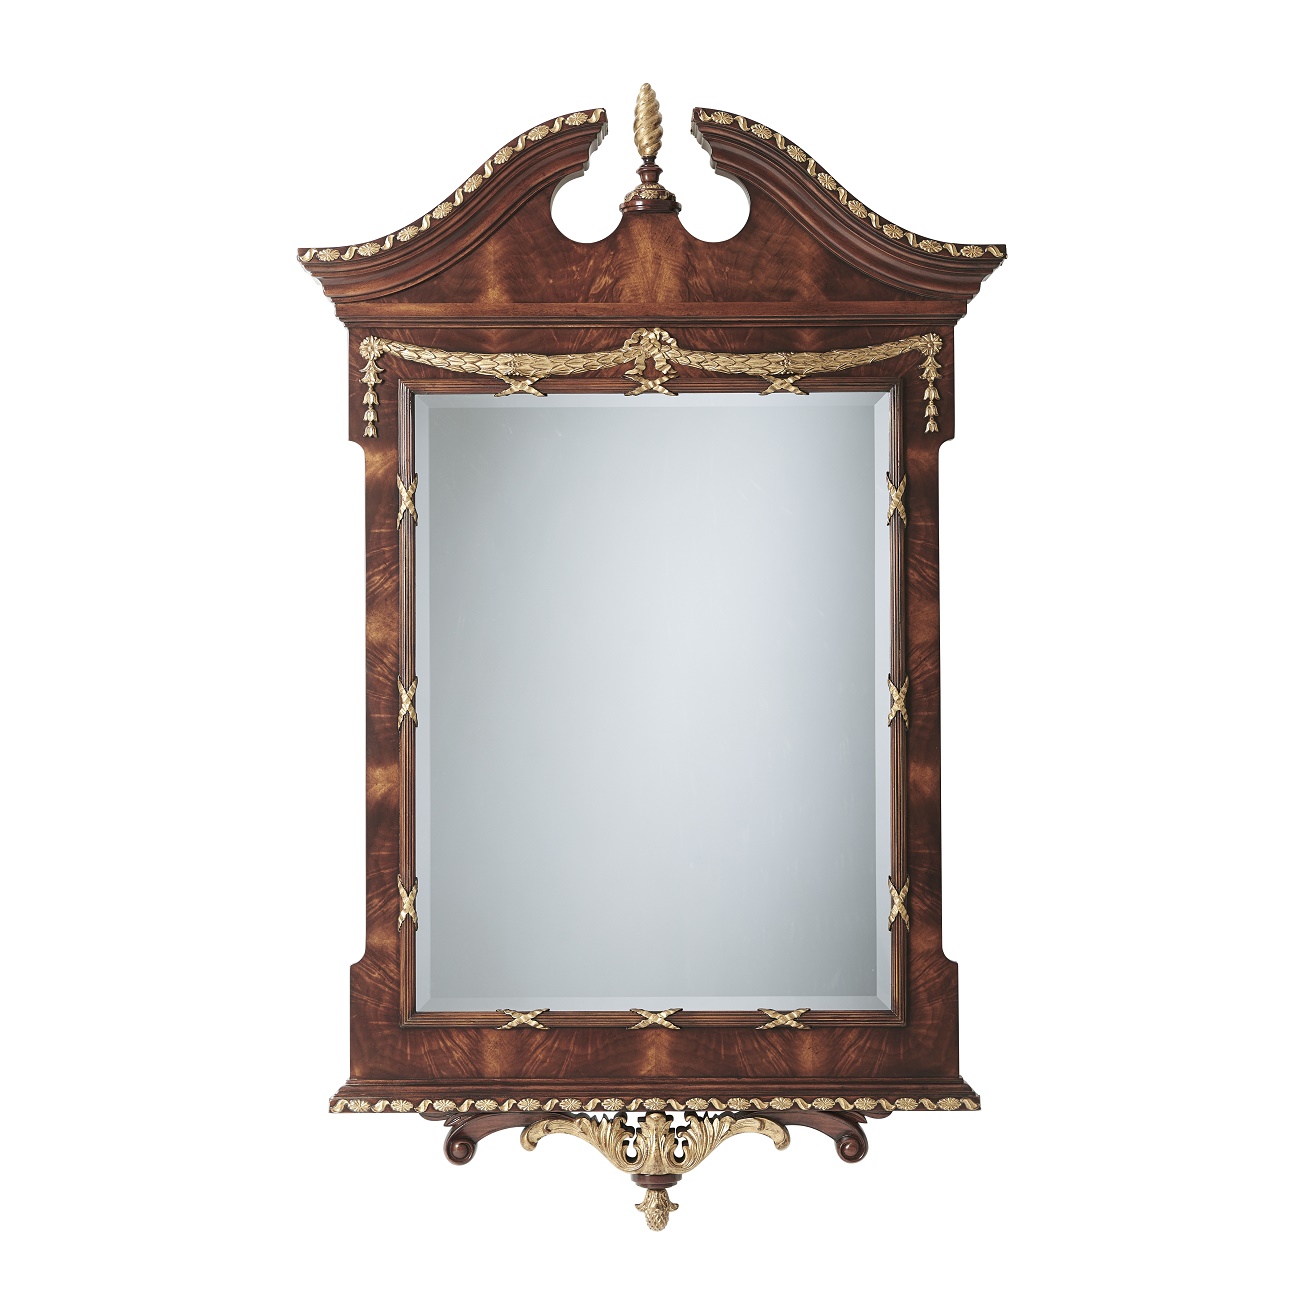 The India Silk Bedroom Mirror, Theodore Alexander Mirror, Brooklyn, New York, Furniture by ABD